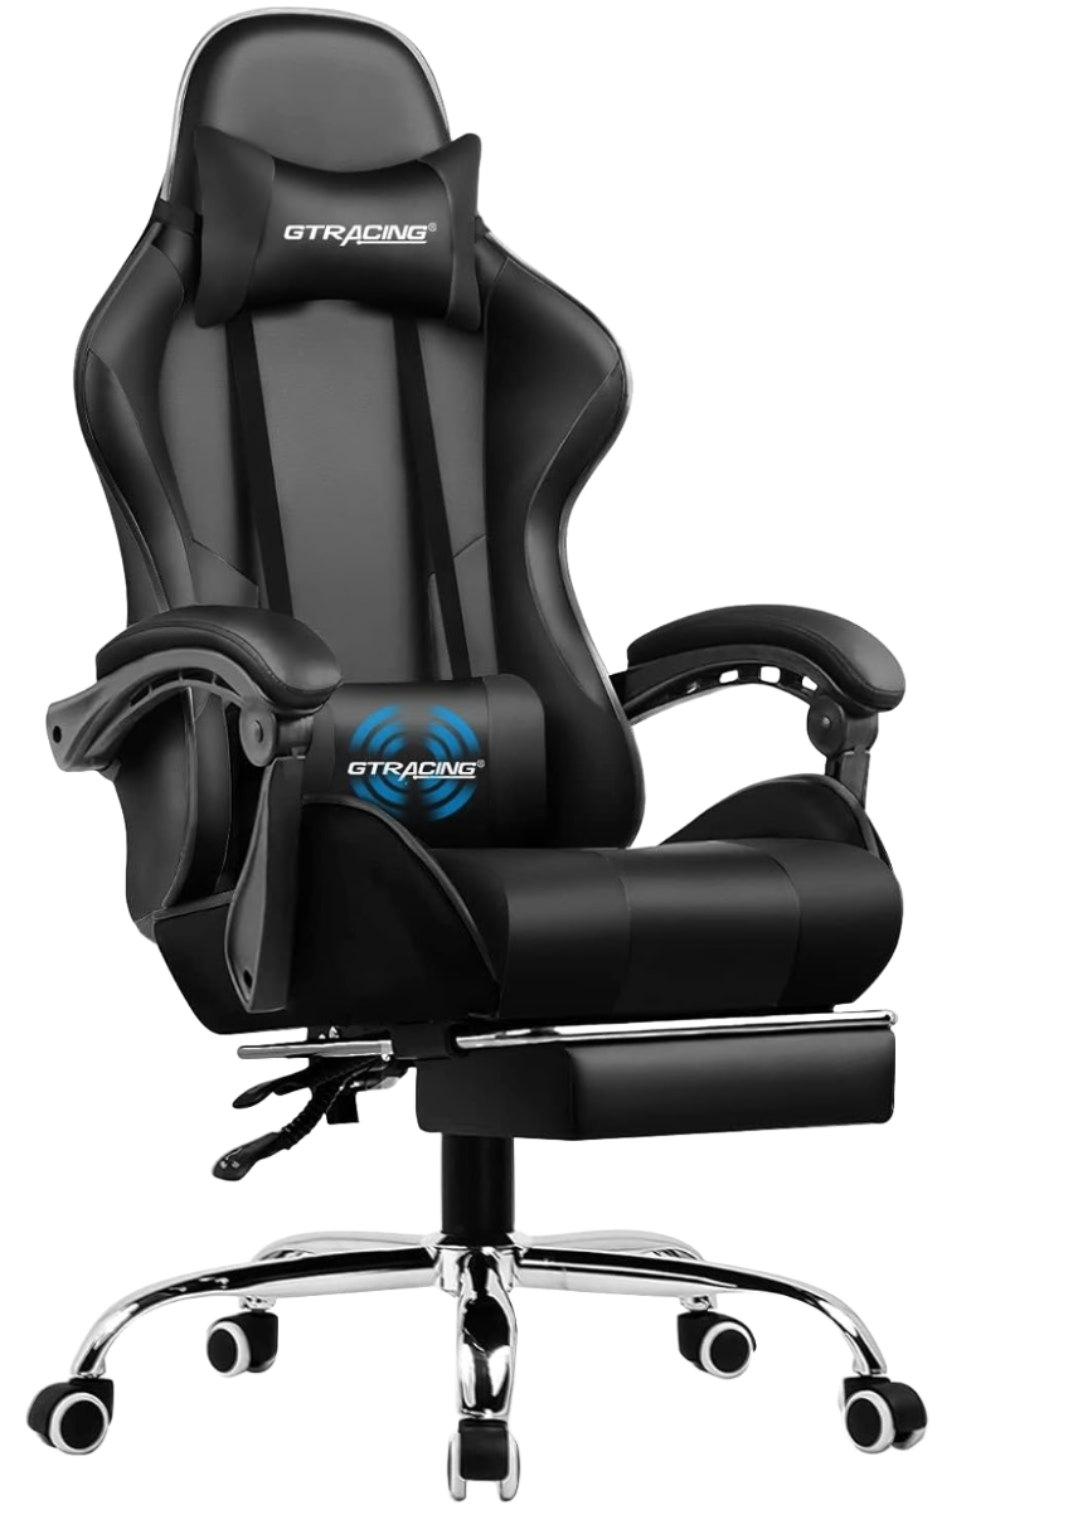 GTRacing Gaming Chair - Black